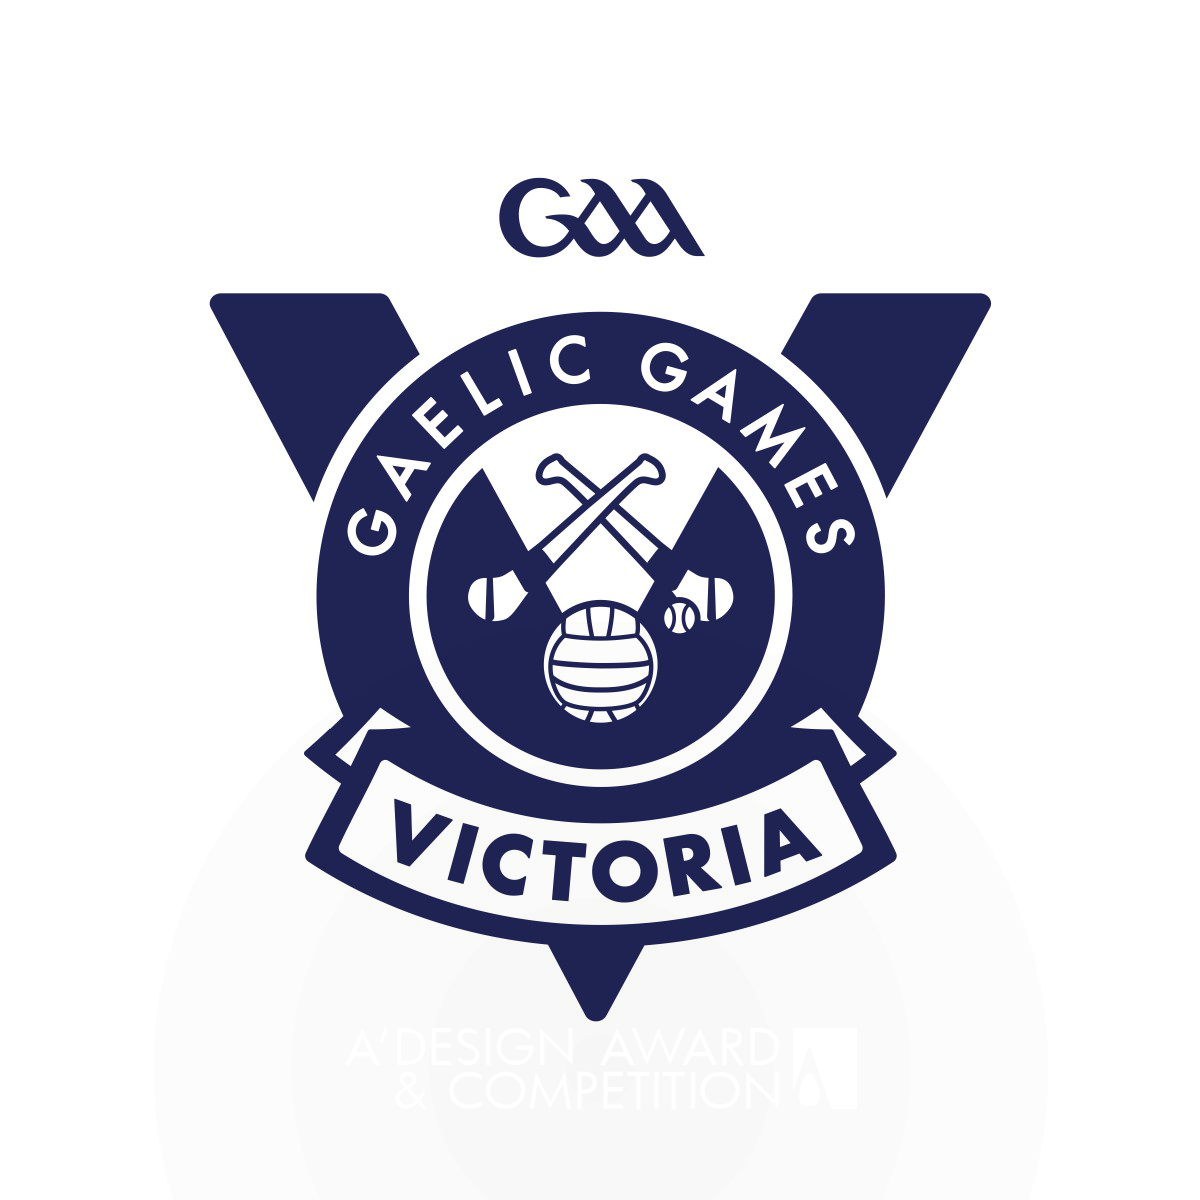 Gaelic Games VIC <b>Corporate Identity